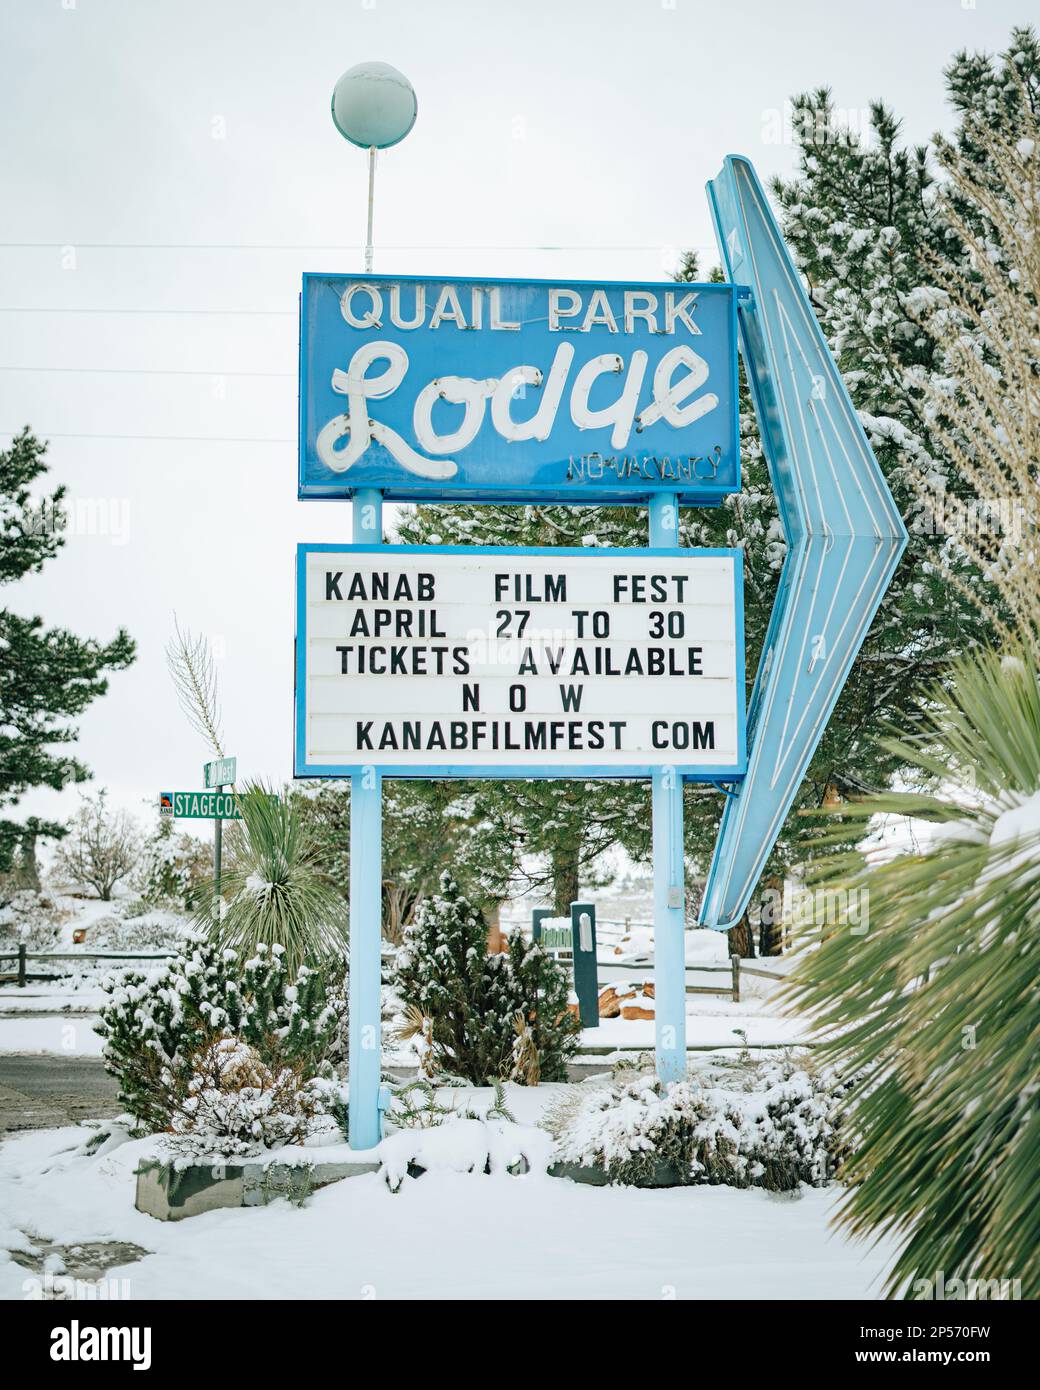 Quail Park Lodge vintage sign in snow, Kanab, Utah Stock Photo